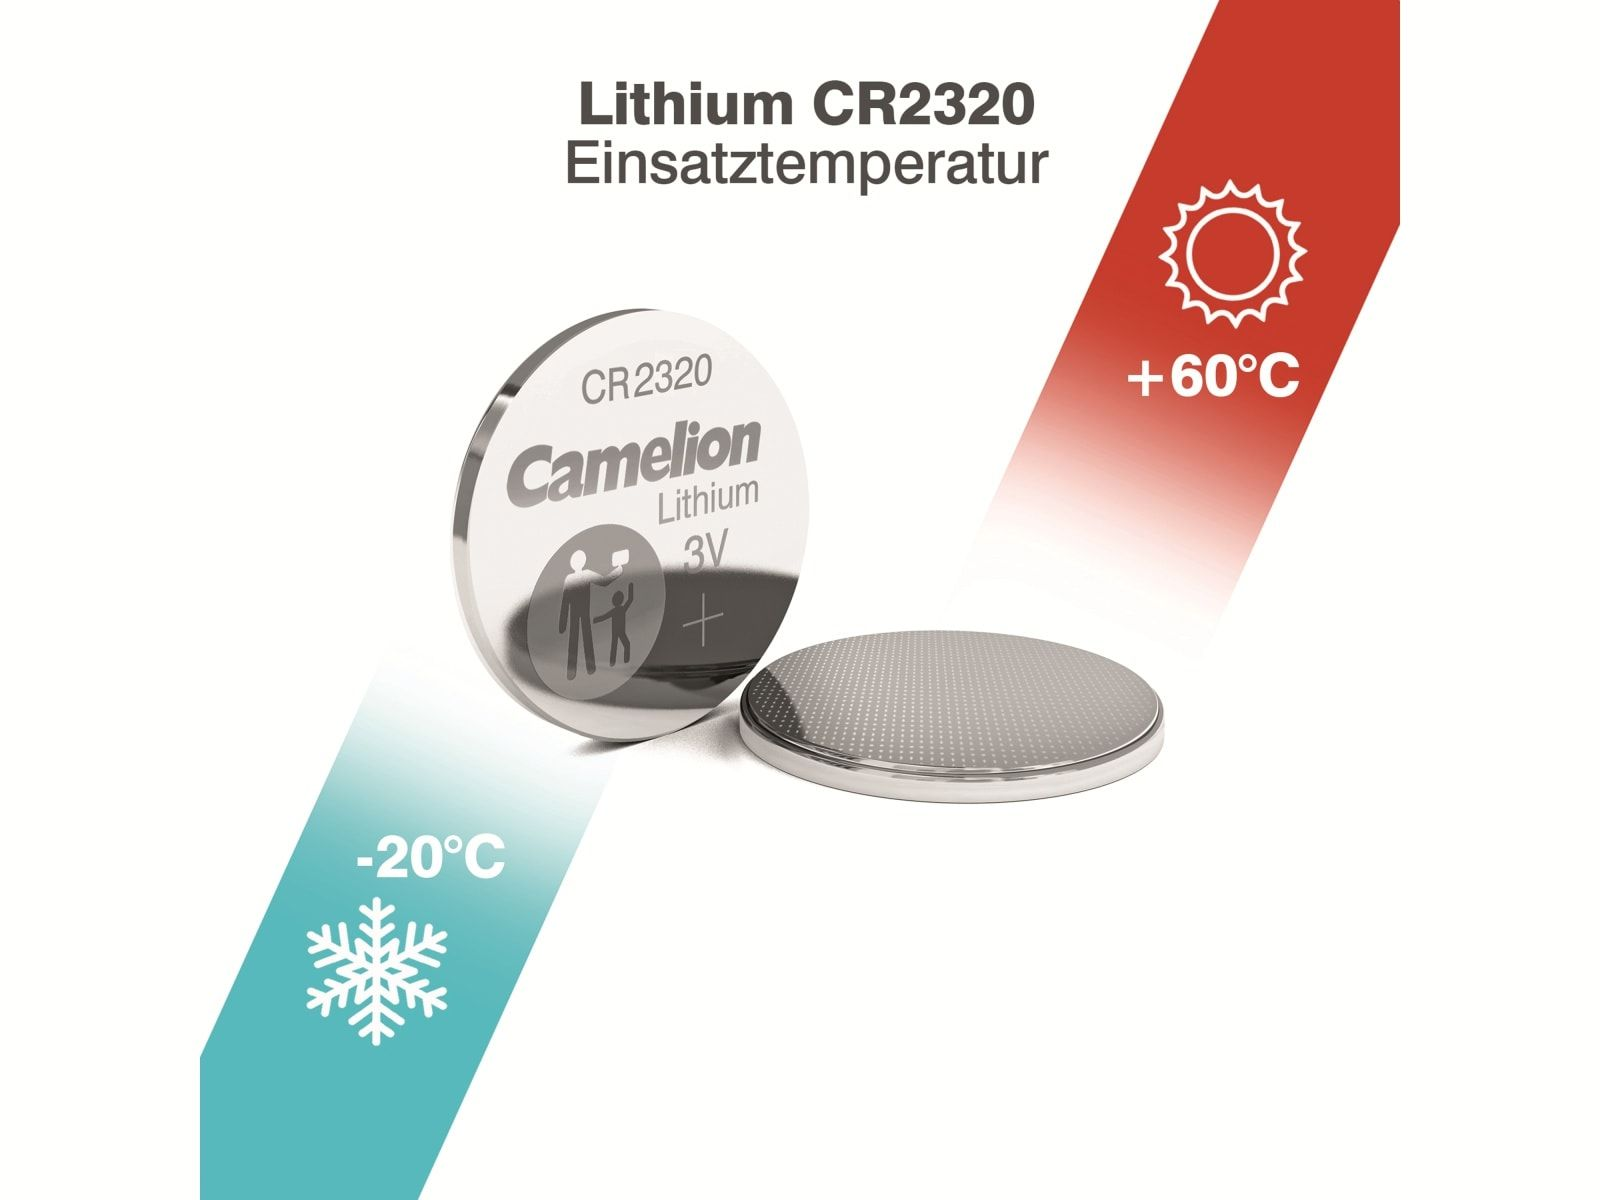 St. CR2320, Lithium-Mangandioxid Knopfzelle 1 Knopfzelle CAMELION (Li-MnO2)